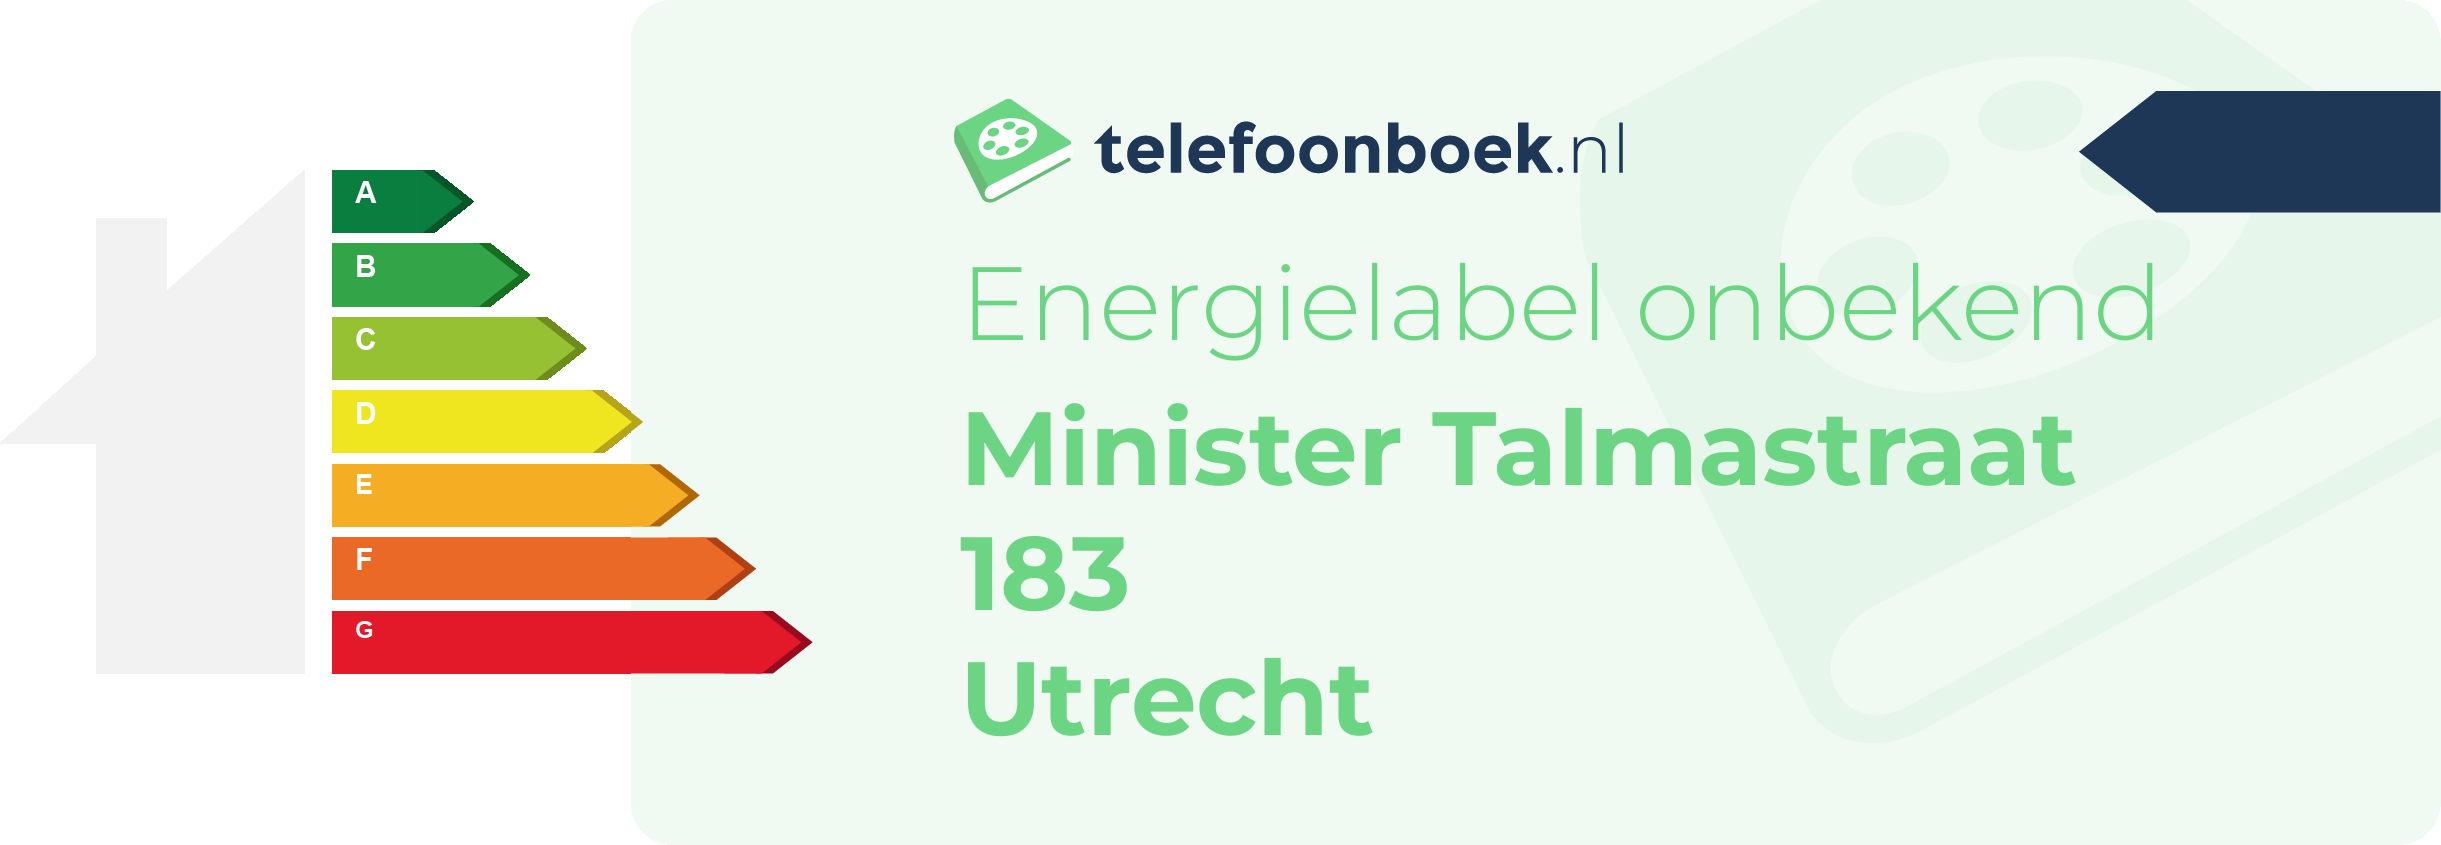 Energielabel Minister Talmastraat 183 Utrecht